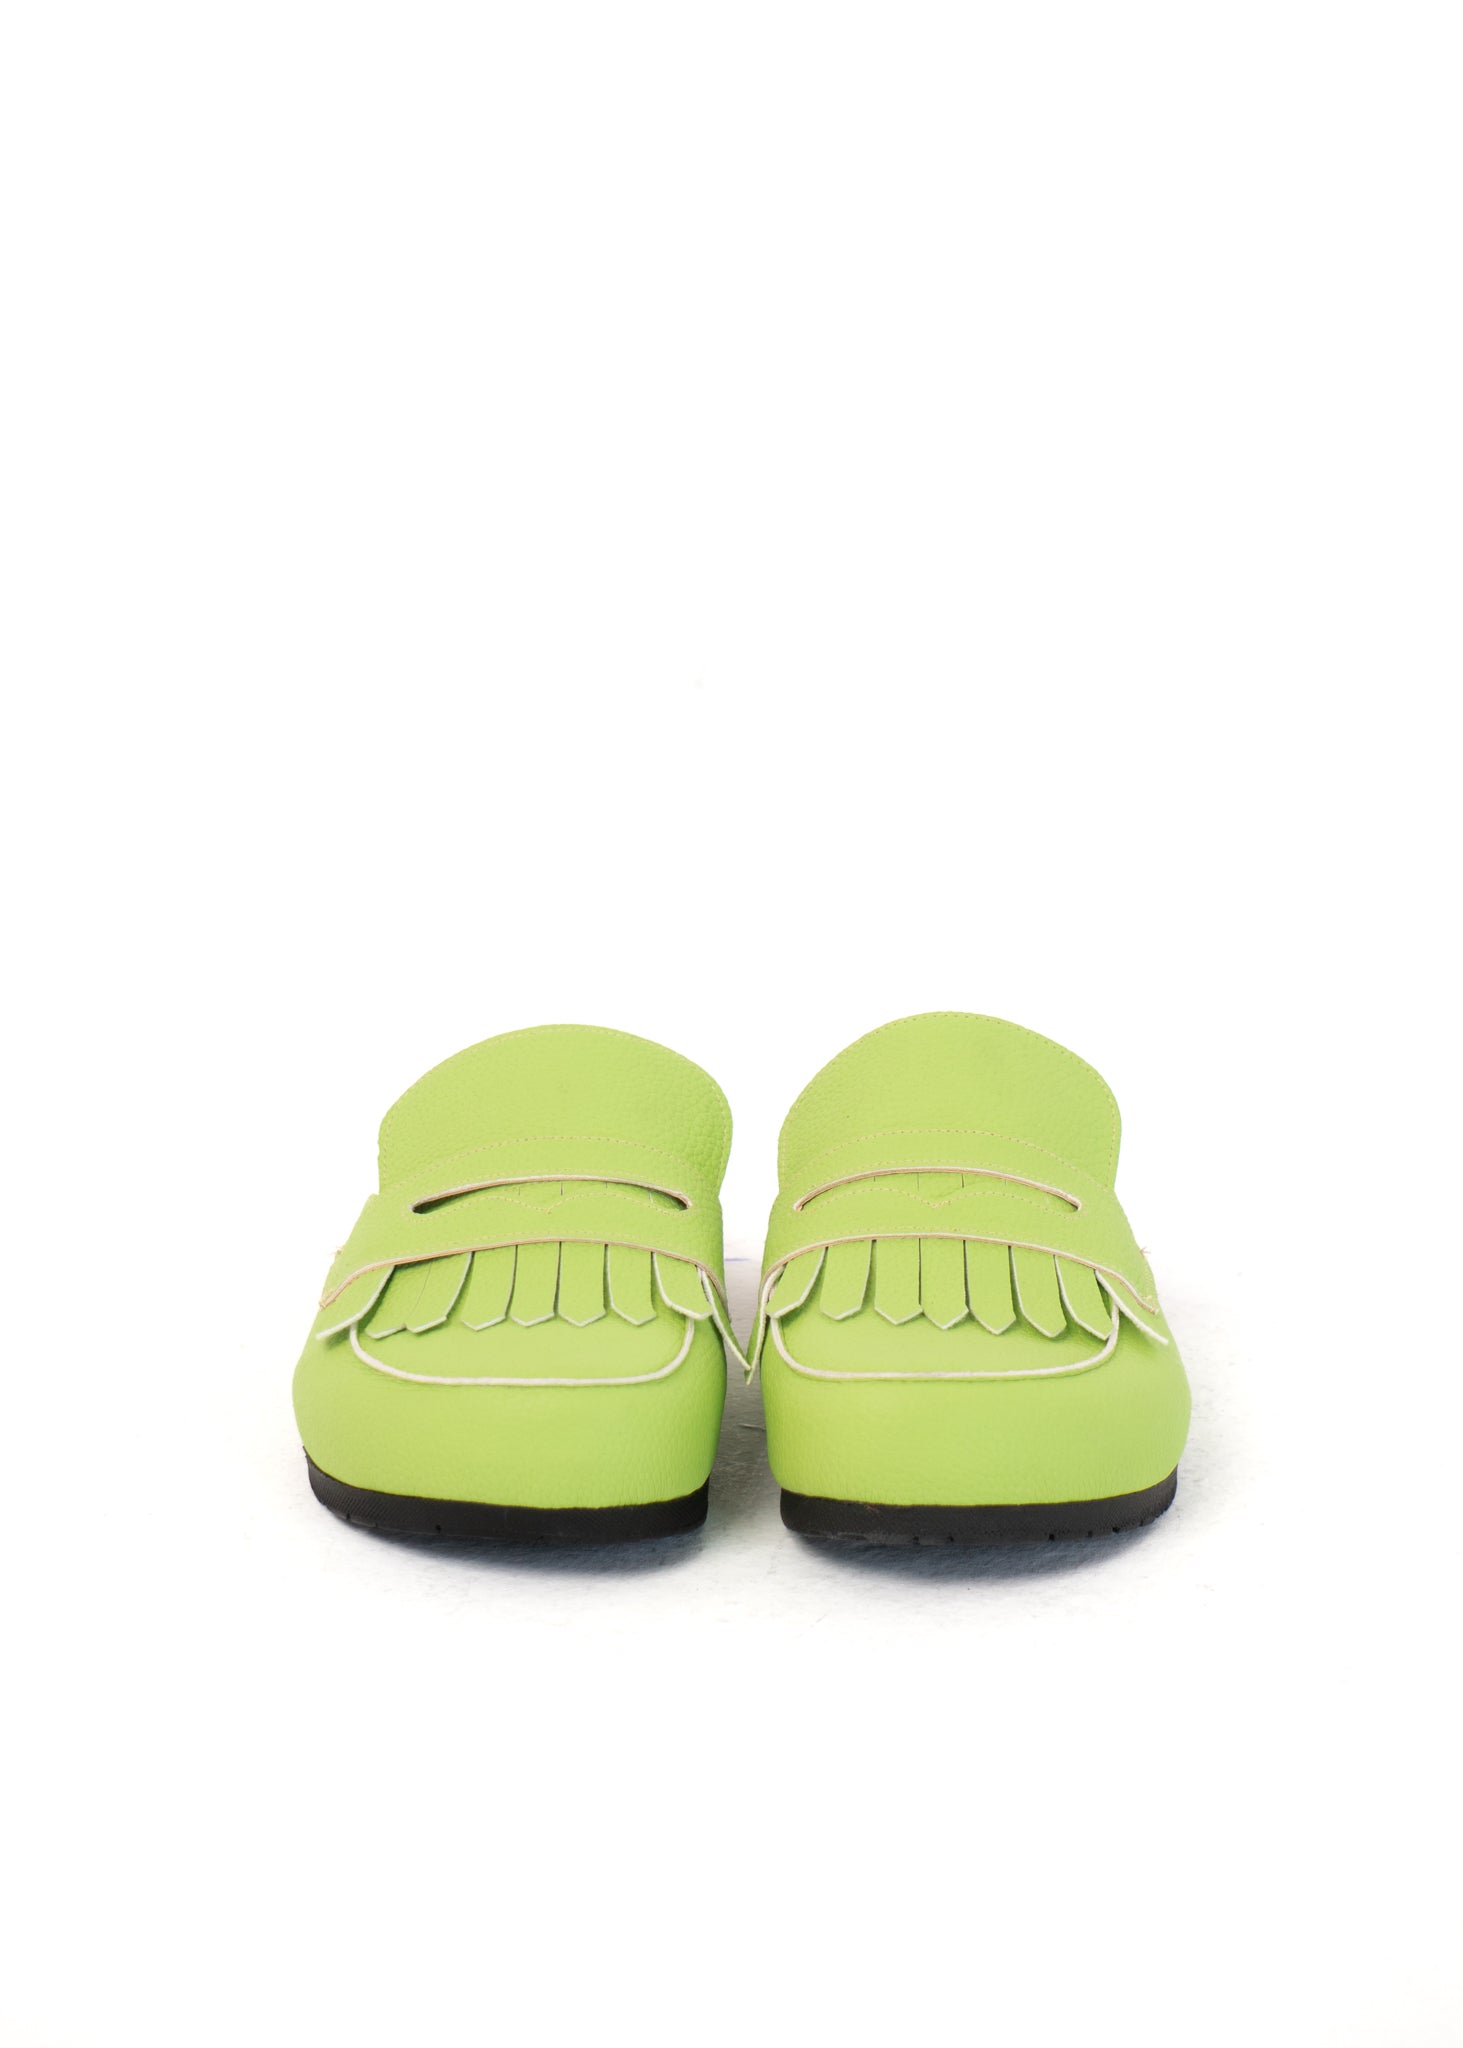 Loafer Clogs " Fringed " -  Apple Green